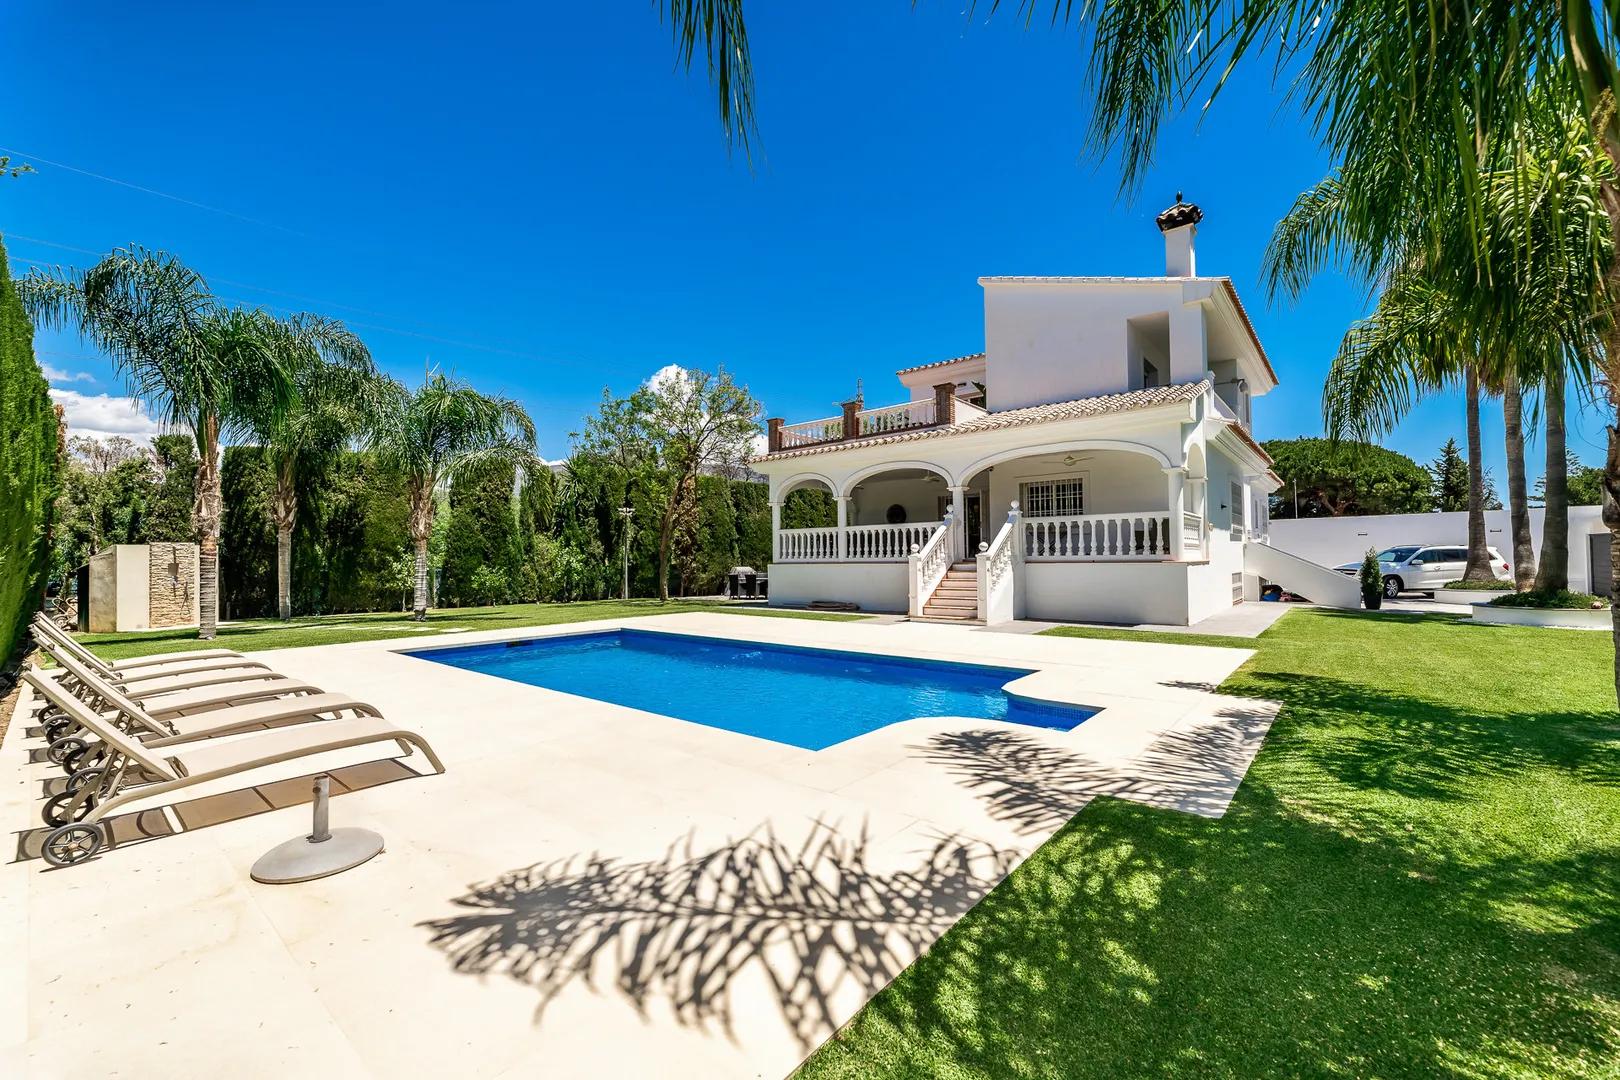 Family villa with spacious garden and pool